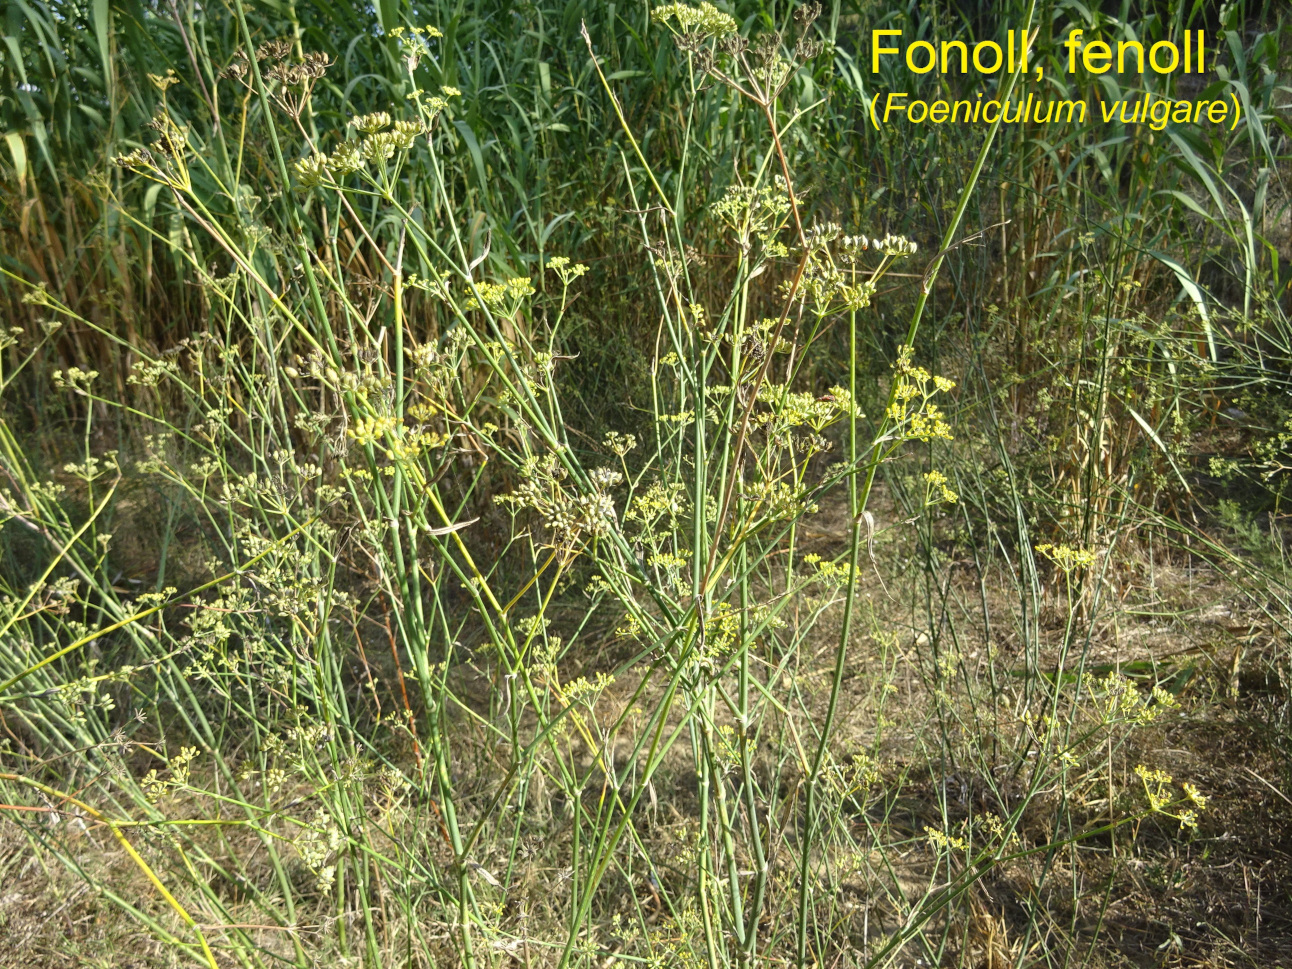 651. Foto 5. escalada Foeniculum vulgare (fonoll) - copia bis